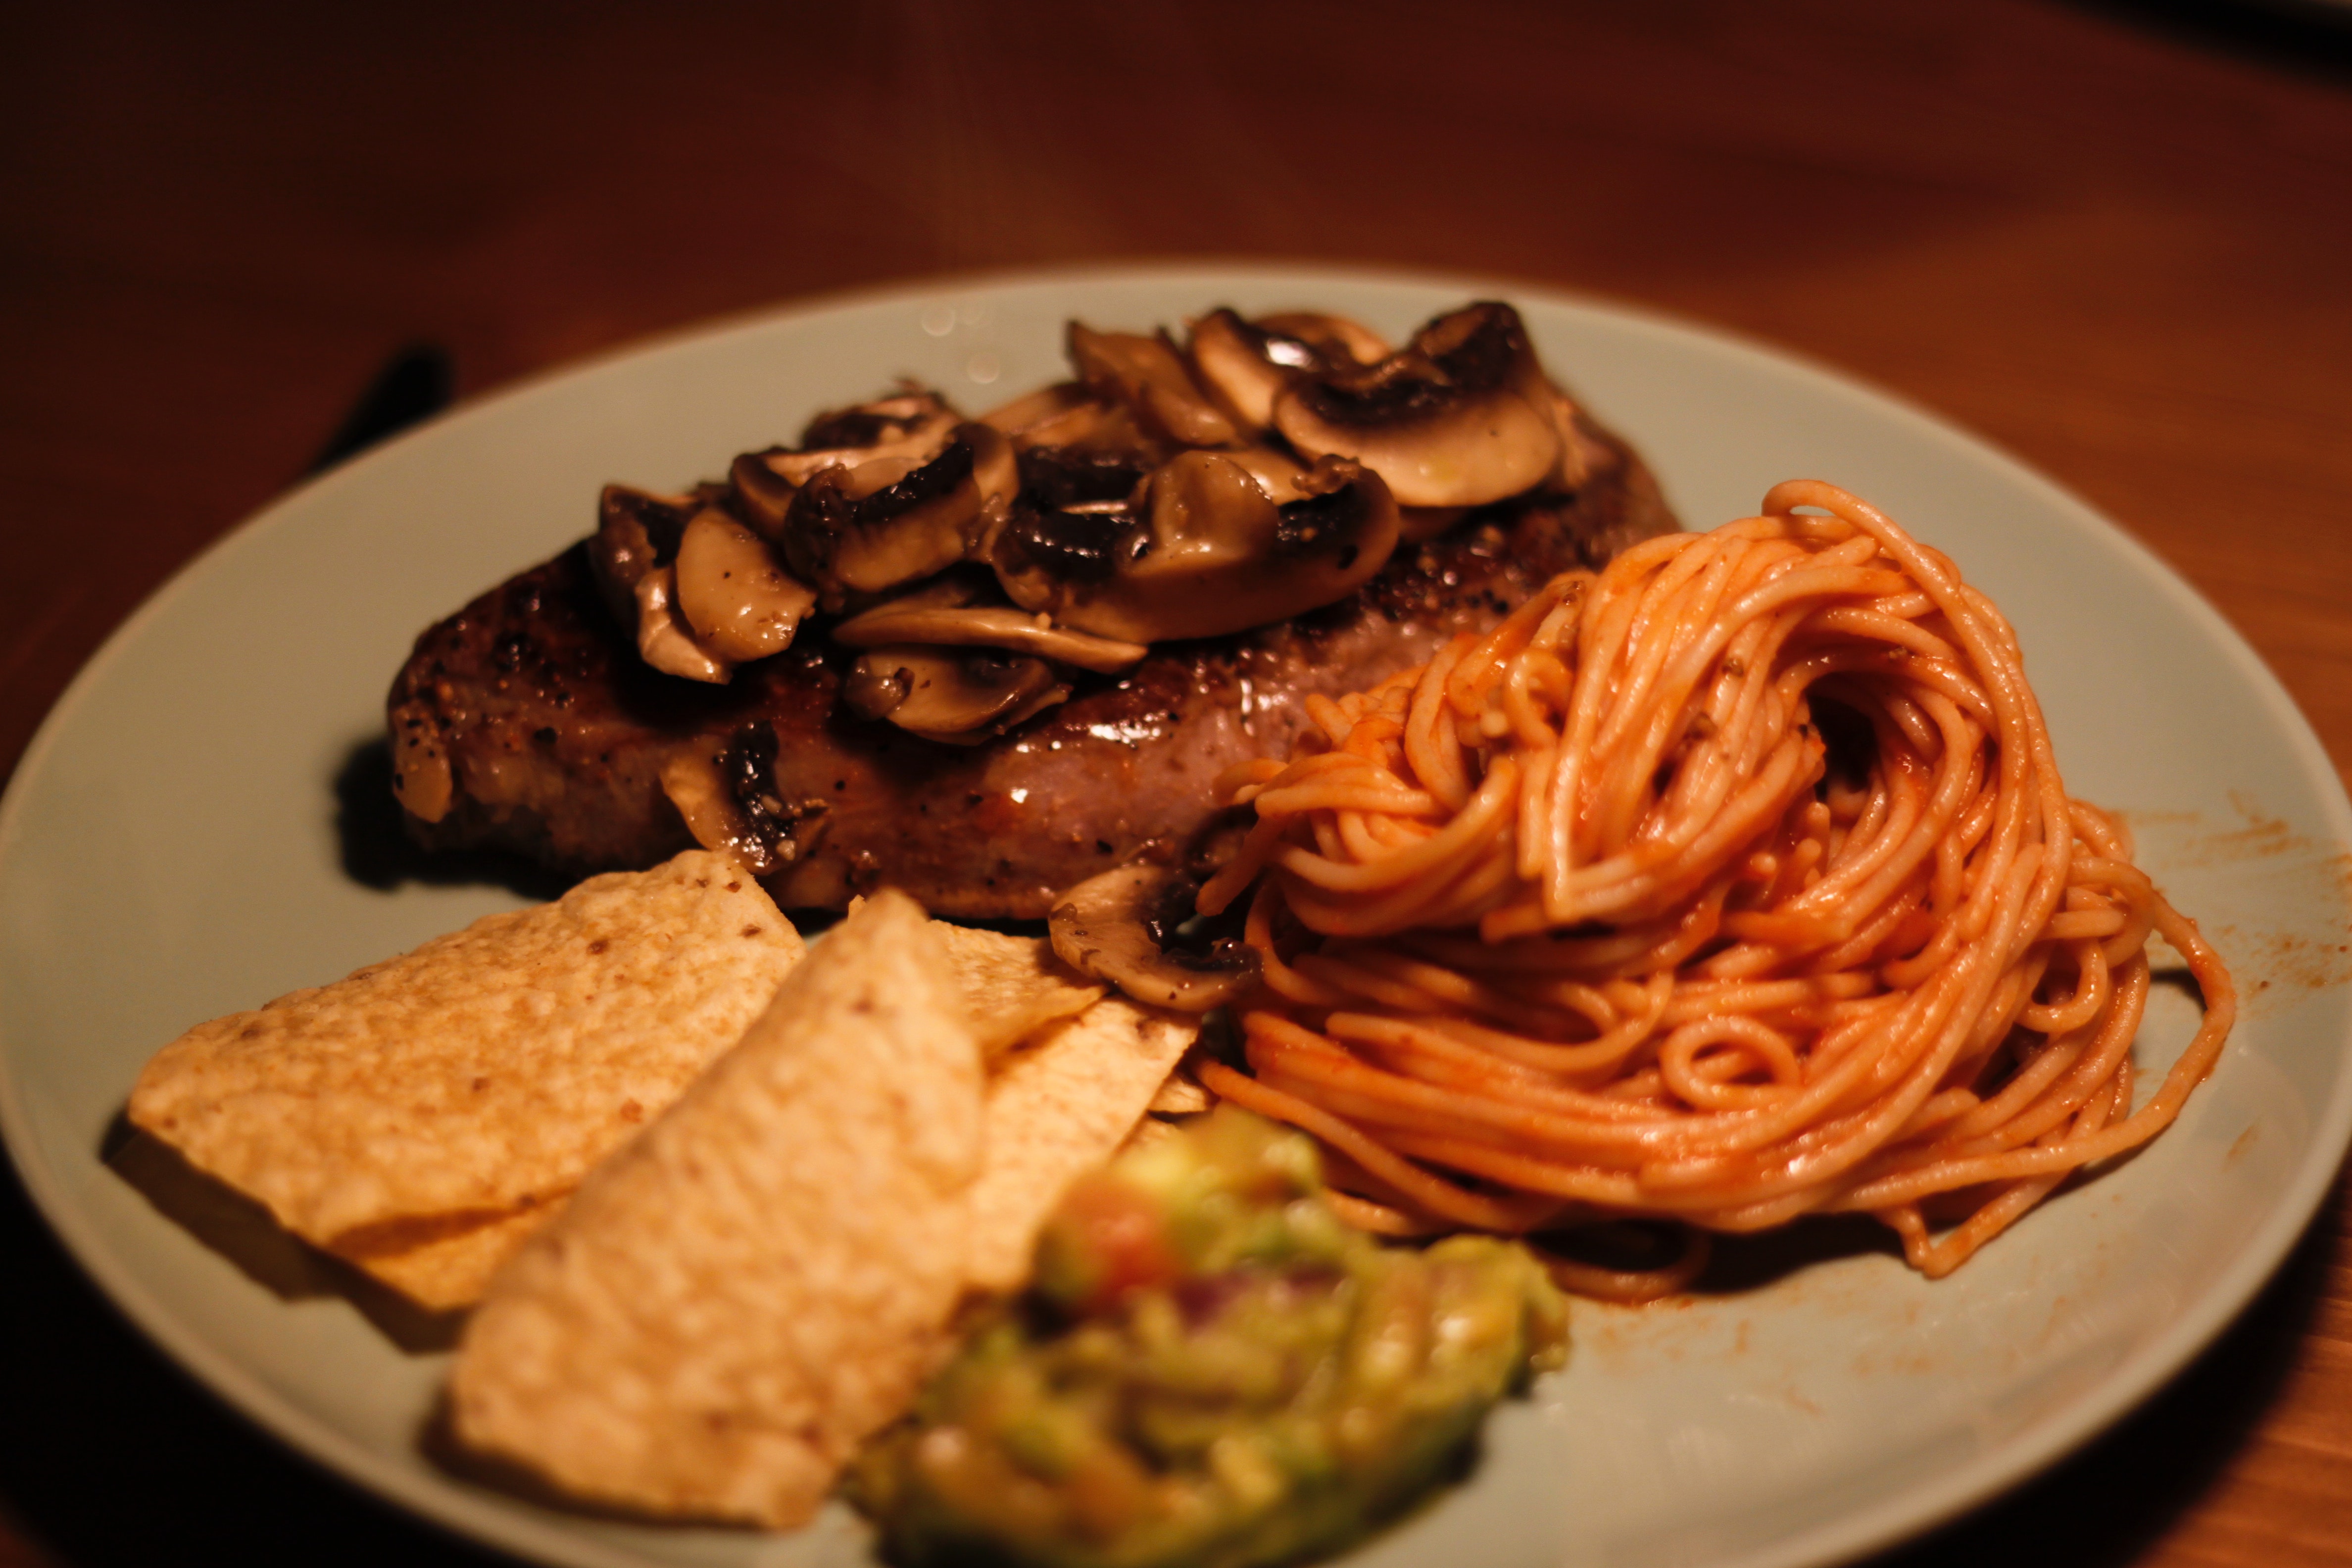 Steak with mushroom and spaghetti photo